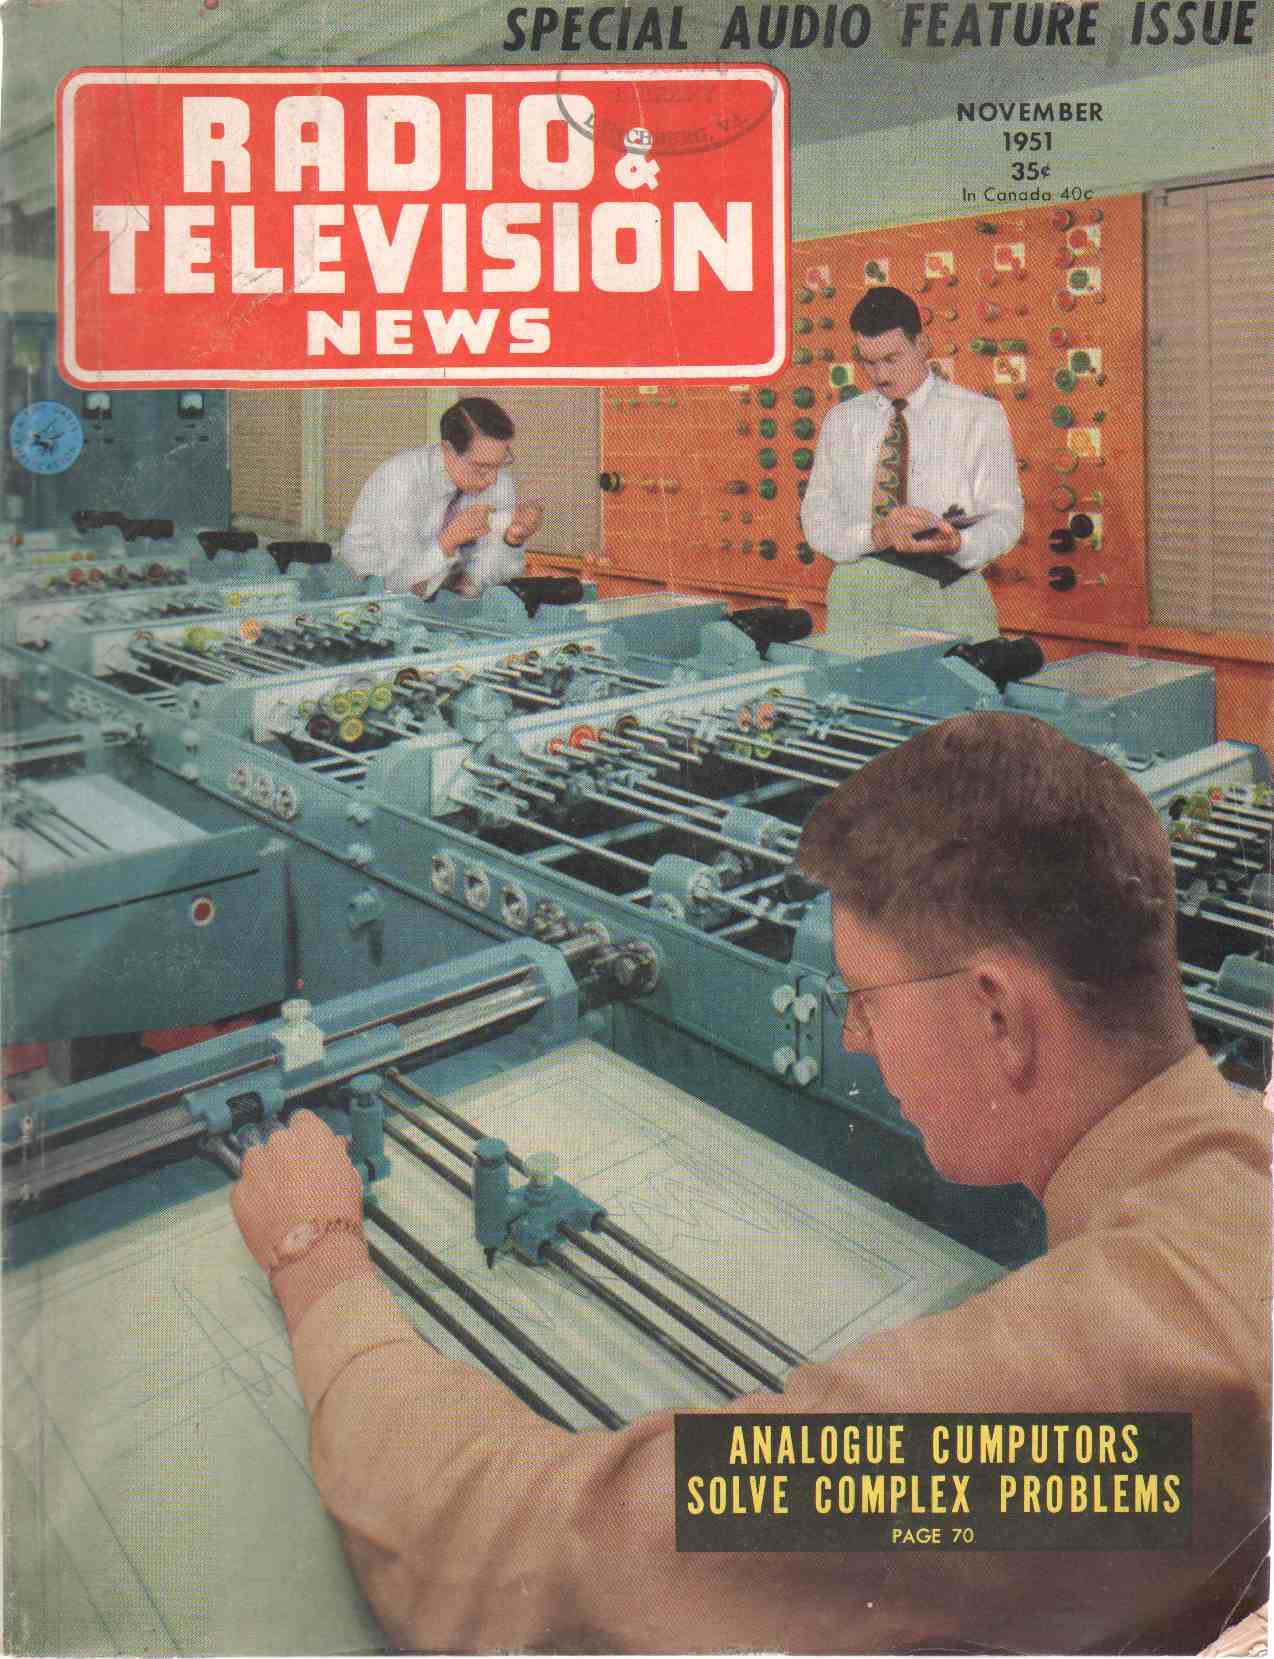 Read, Oliver; editor - RADIO & TELEVISION NEWS Volume 46 Number 5 November 1951